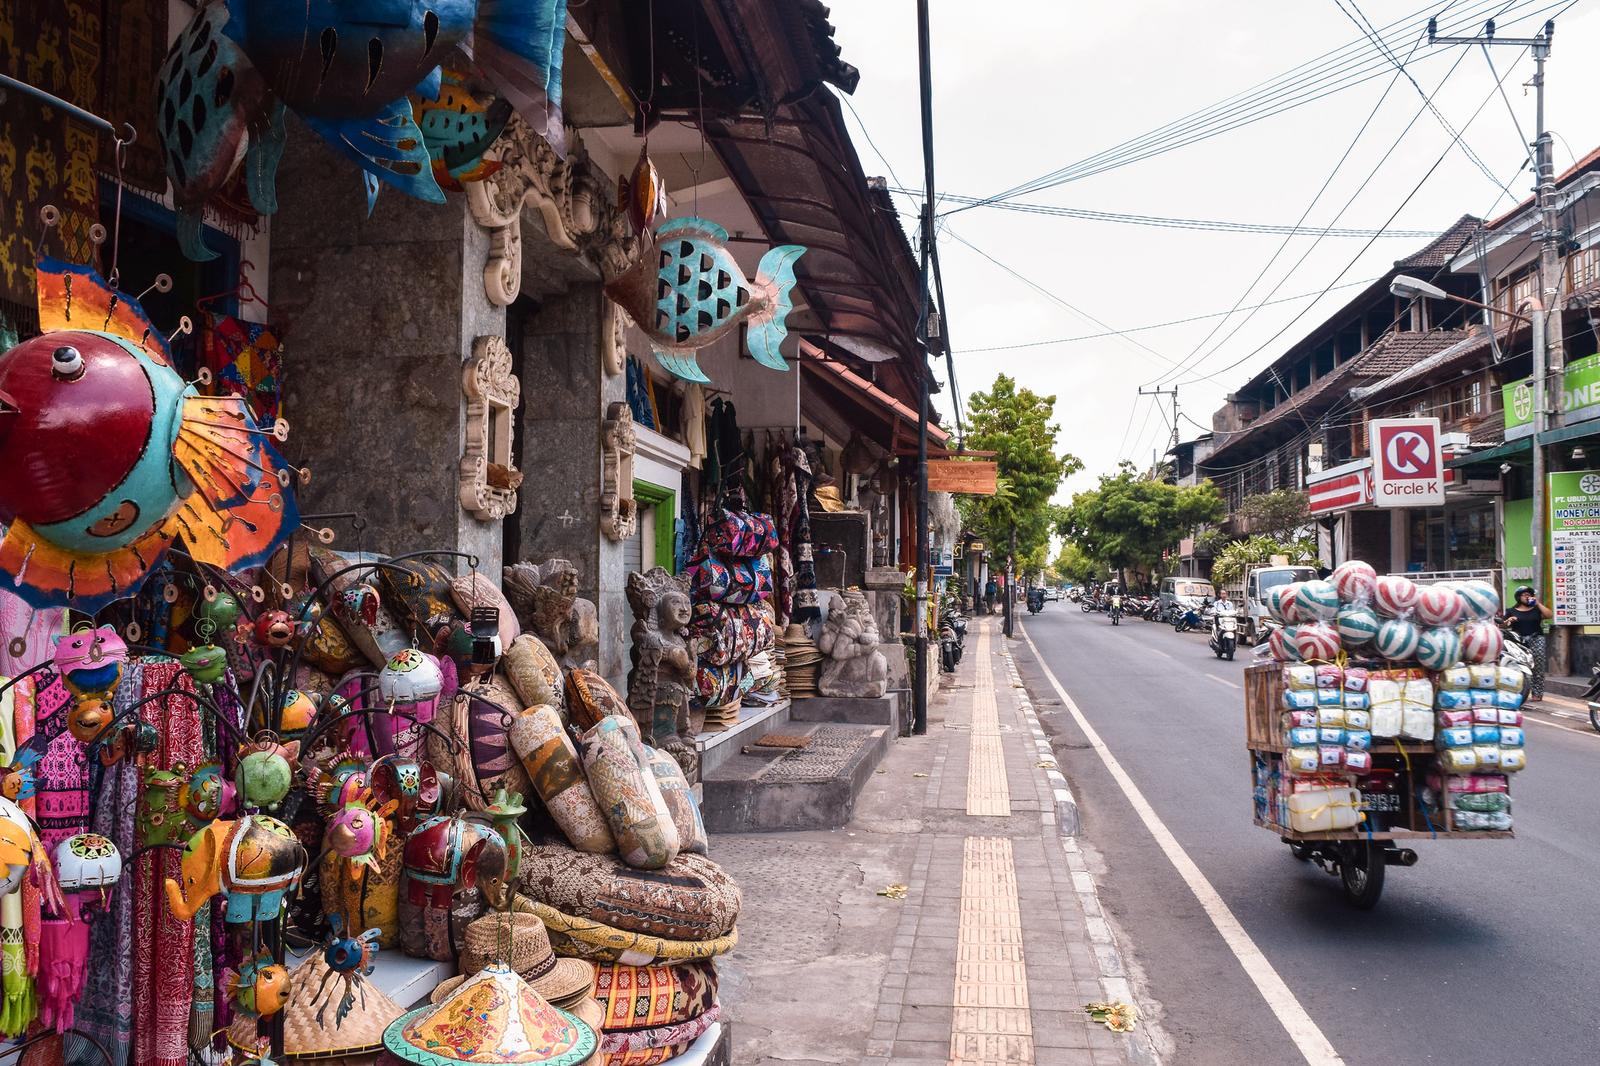 Street in Ubud